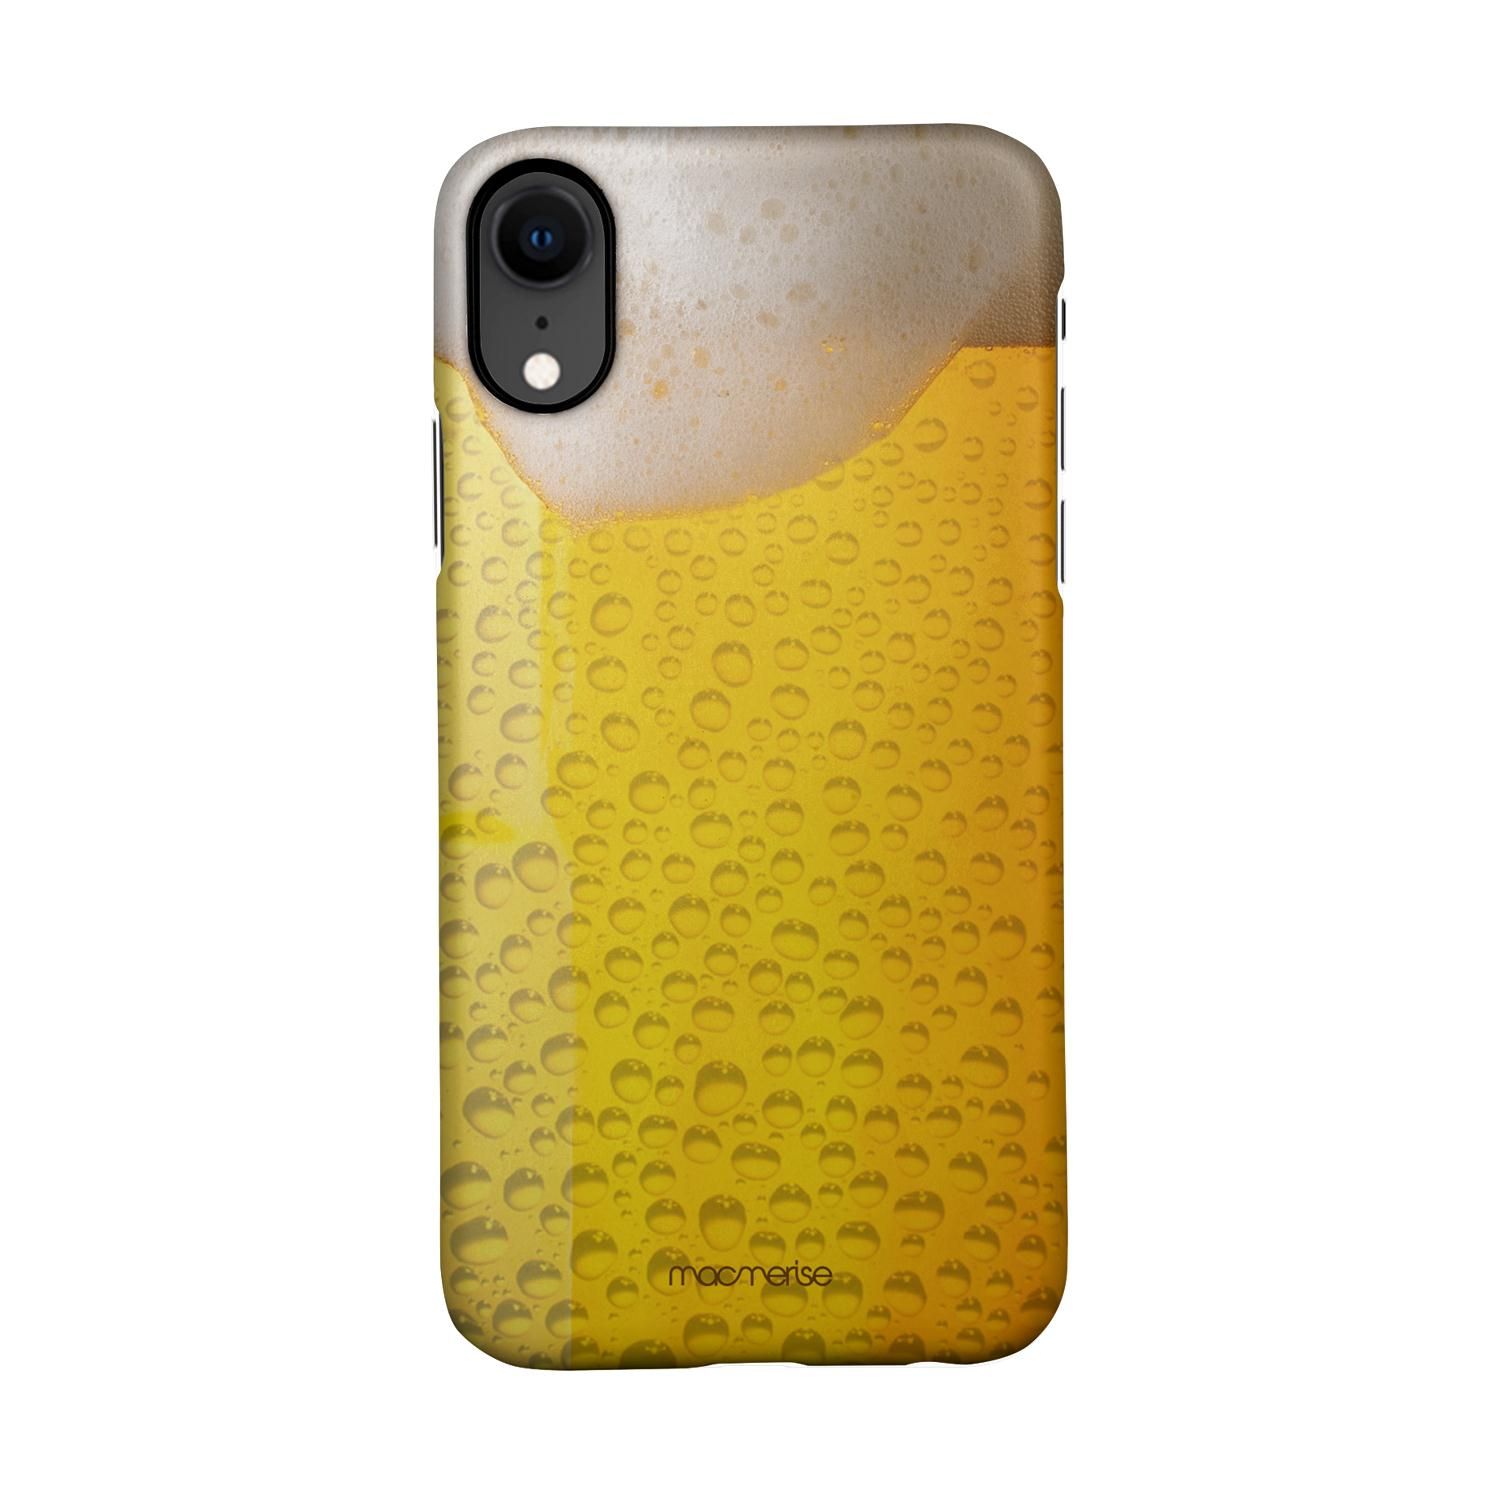 Buy Chug It - Sleek Phone Case for iPhone XR Online